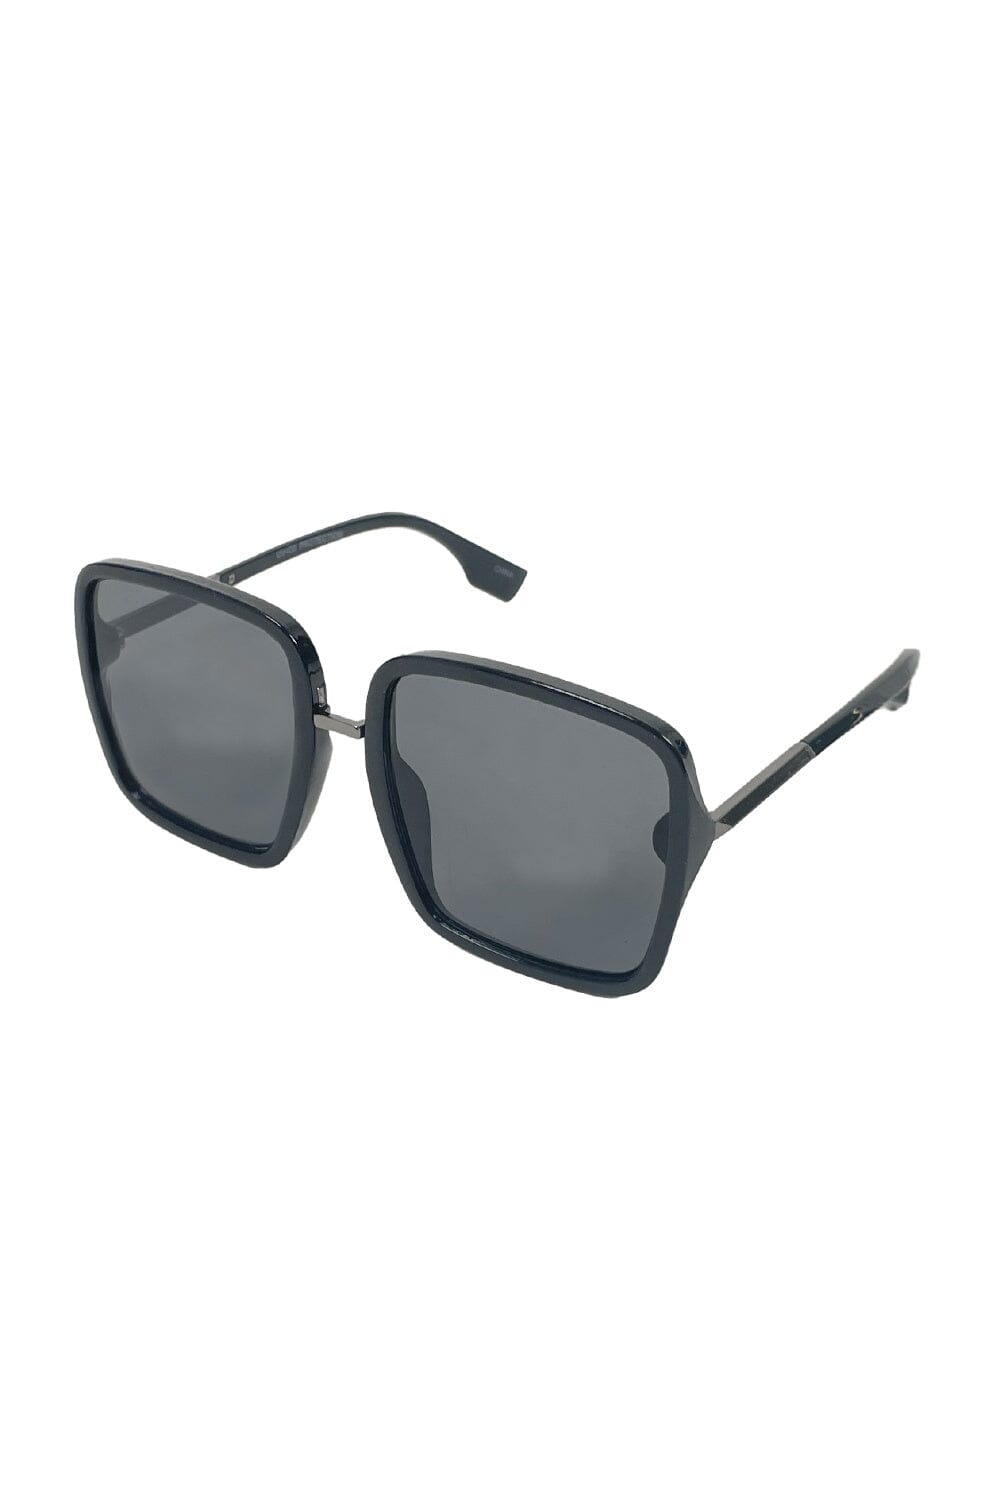 Marley Sunglasses Black sunglasses